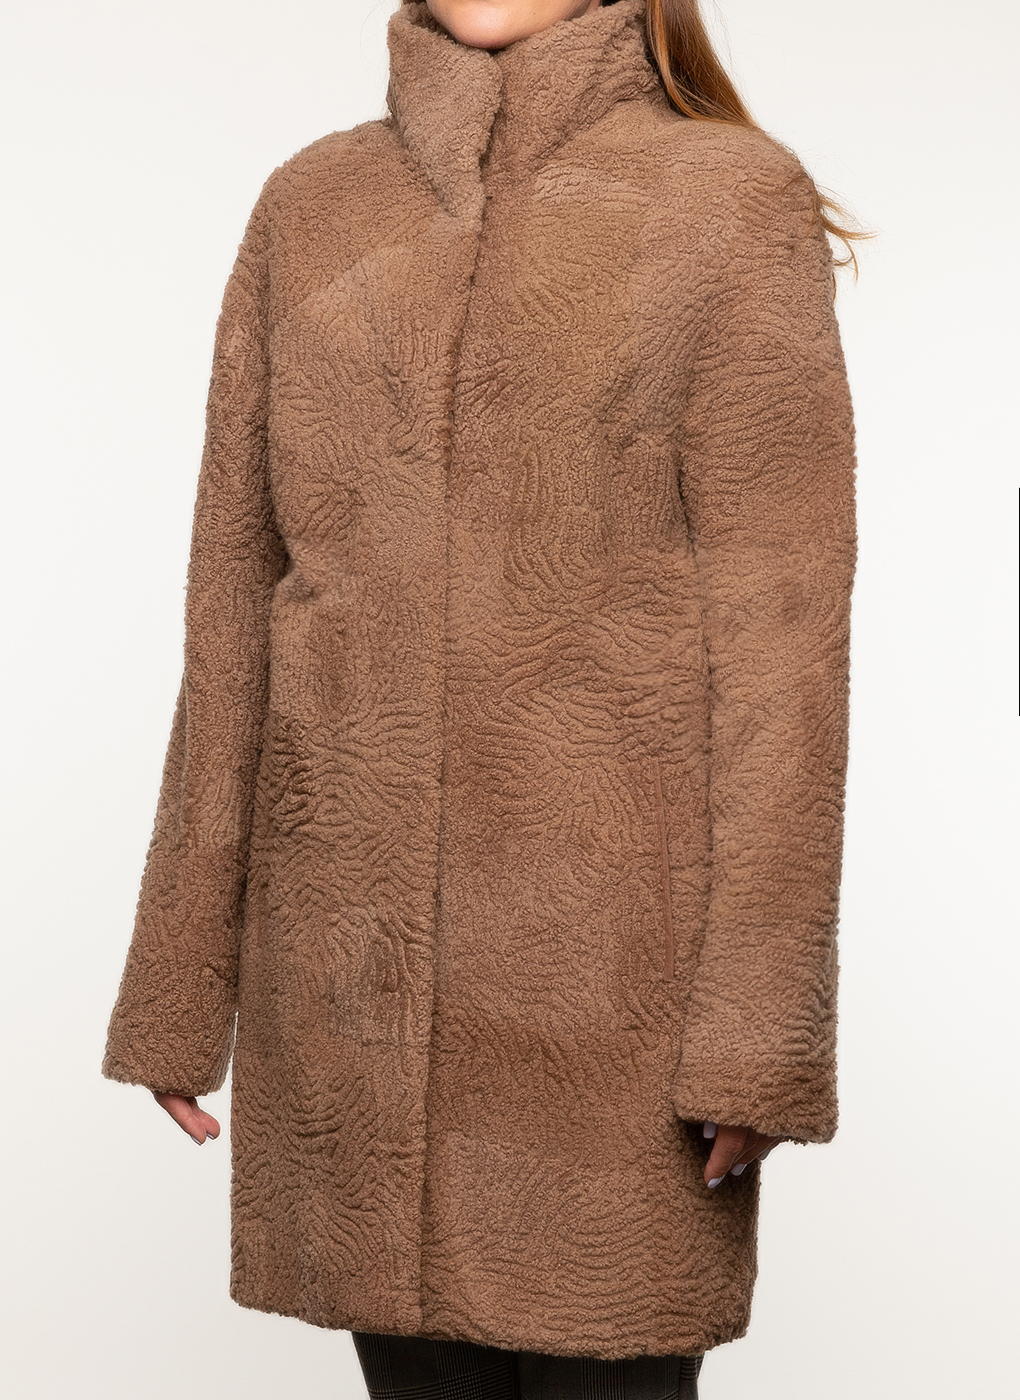 Пальто женское Dzhanbekoff 44909 бежевое 46 RU